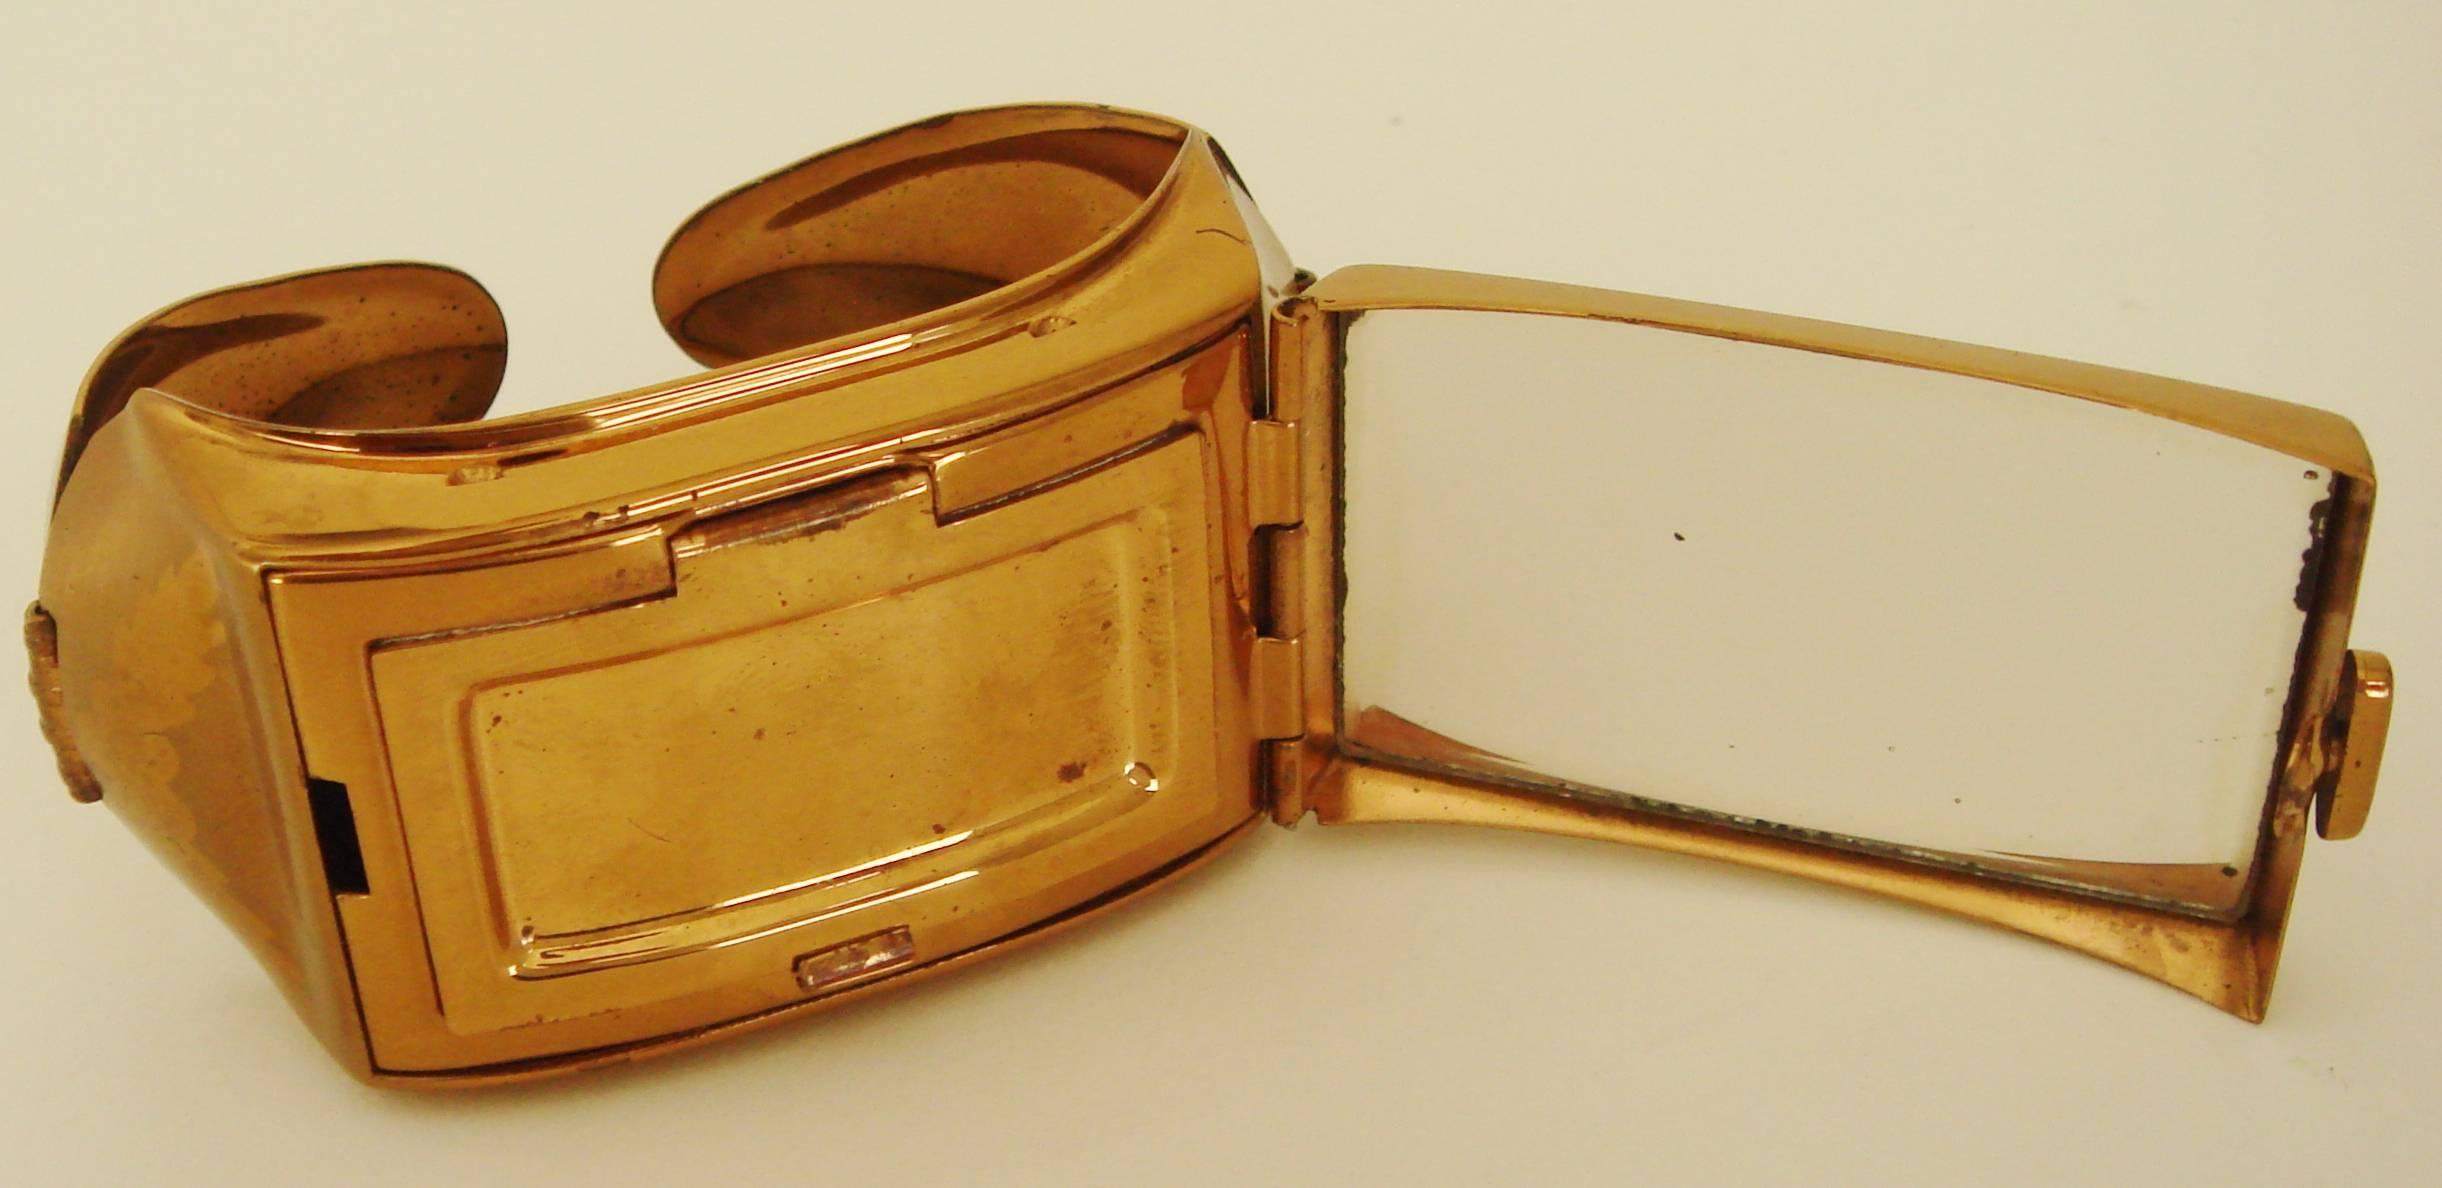 Rare American Art Deco Brass-Plated Geometric Compact Clamper Bracelet by K & K 1